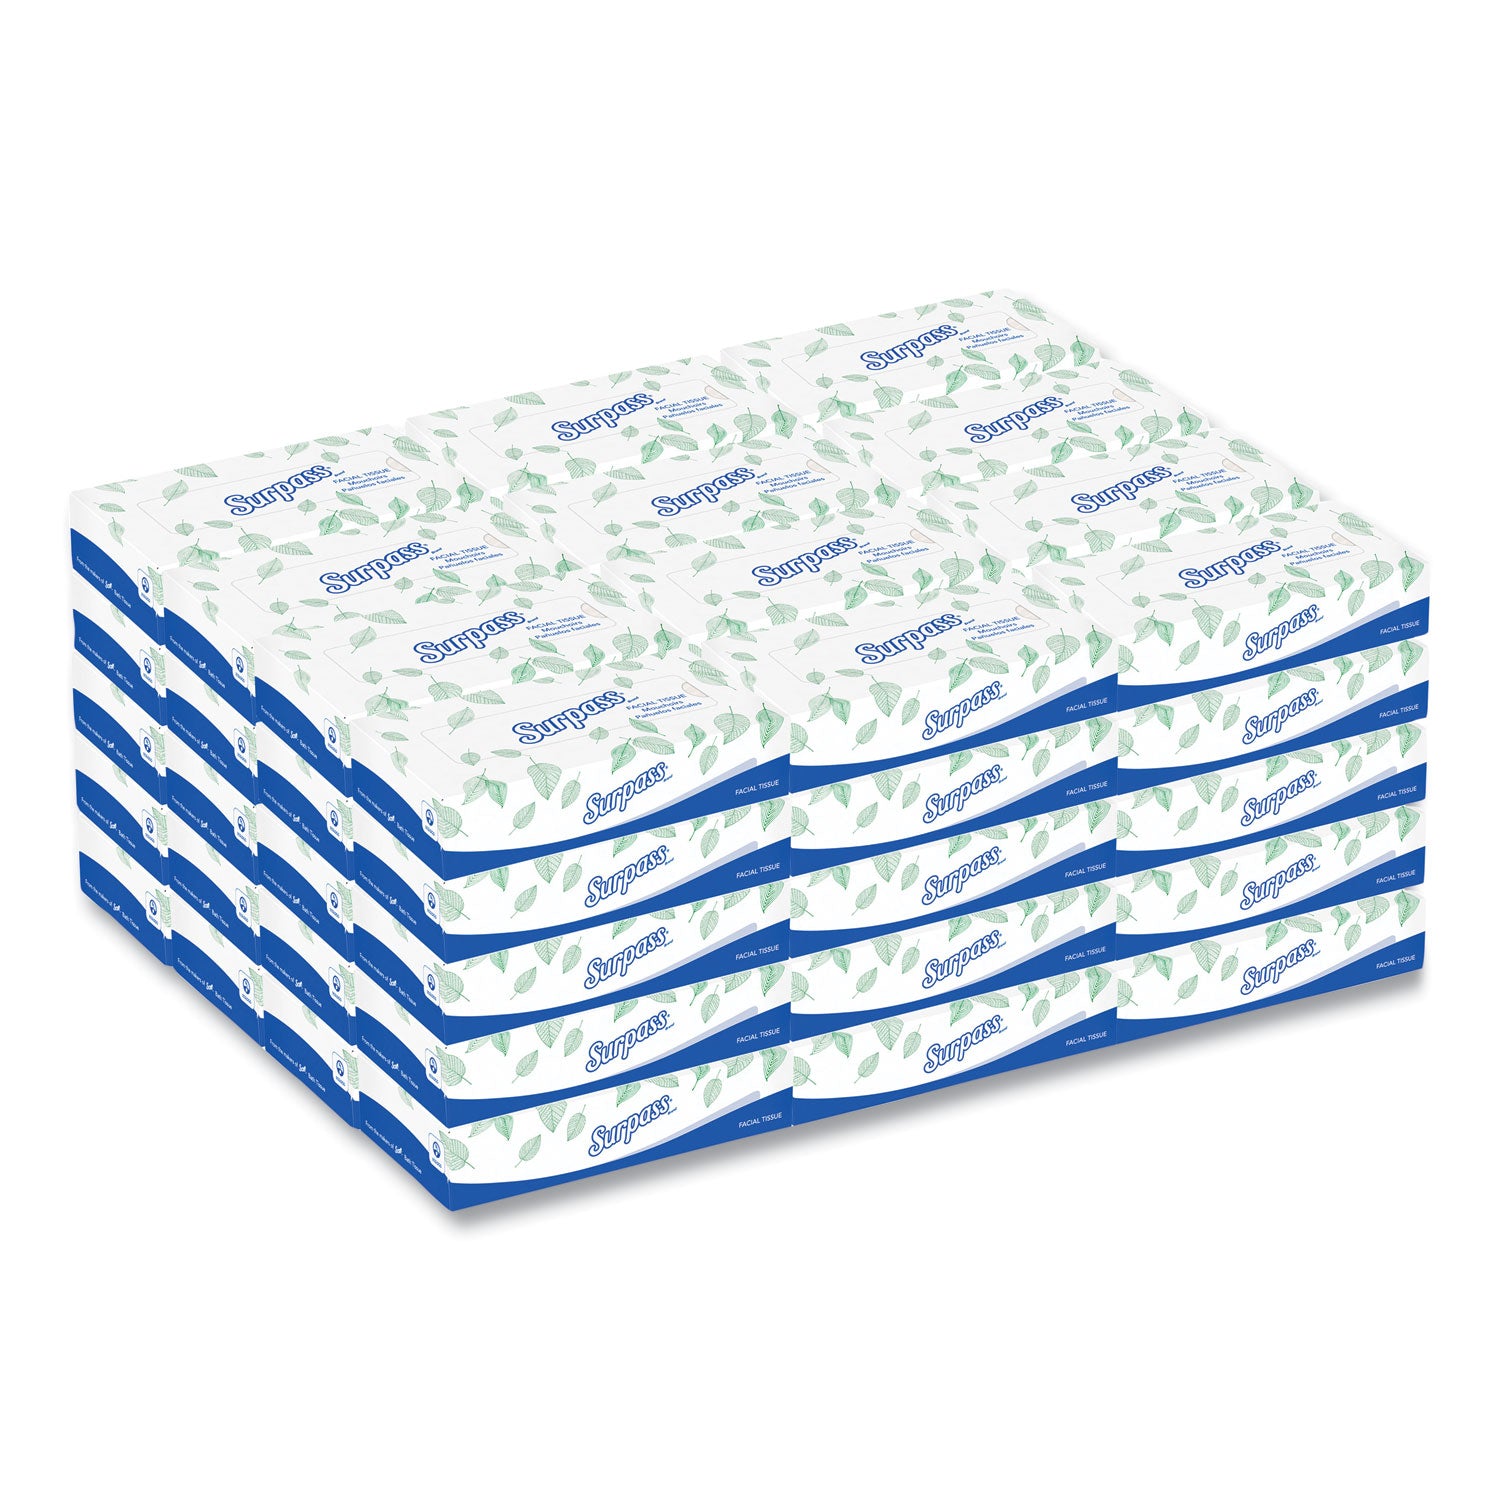 Facial Tissue for Business, 2-Ply, White,125 Sheets/Box, 60 Boxes/Carton - 